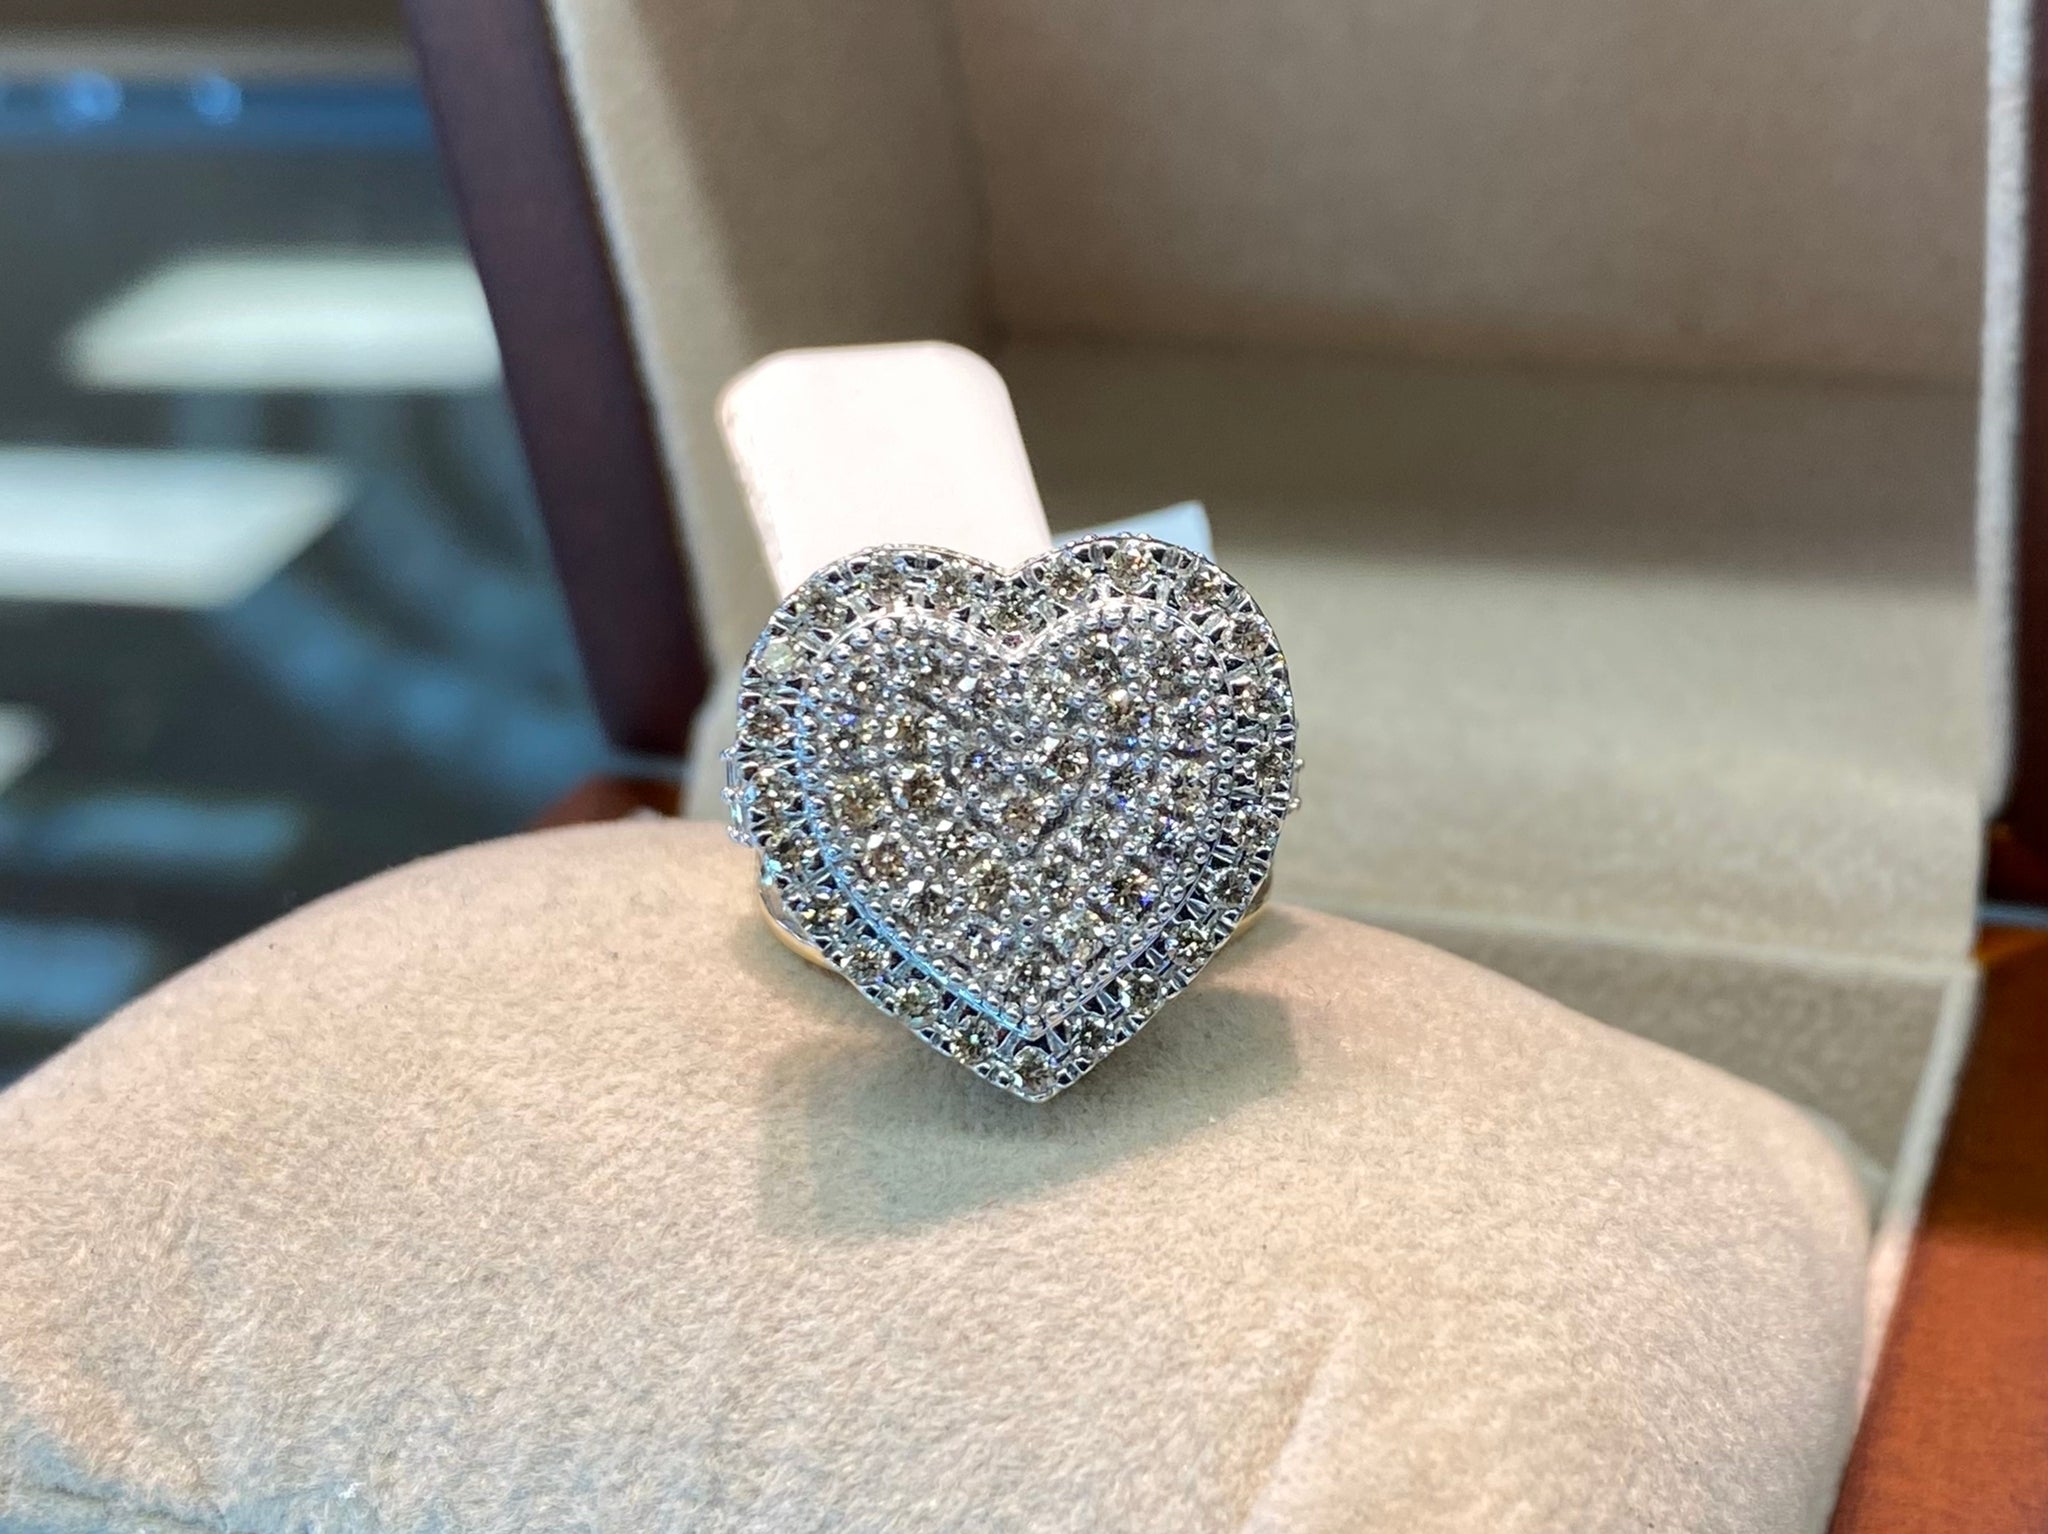 Jumbo Heart Shaped Diamond Ring